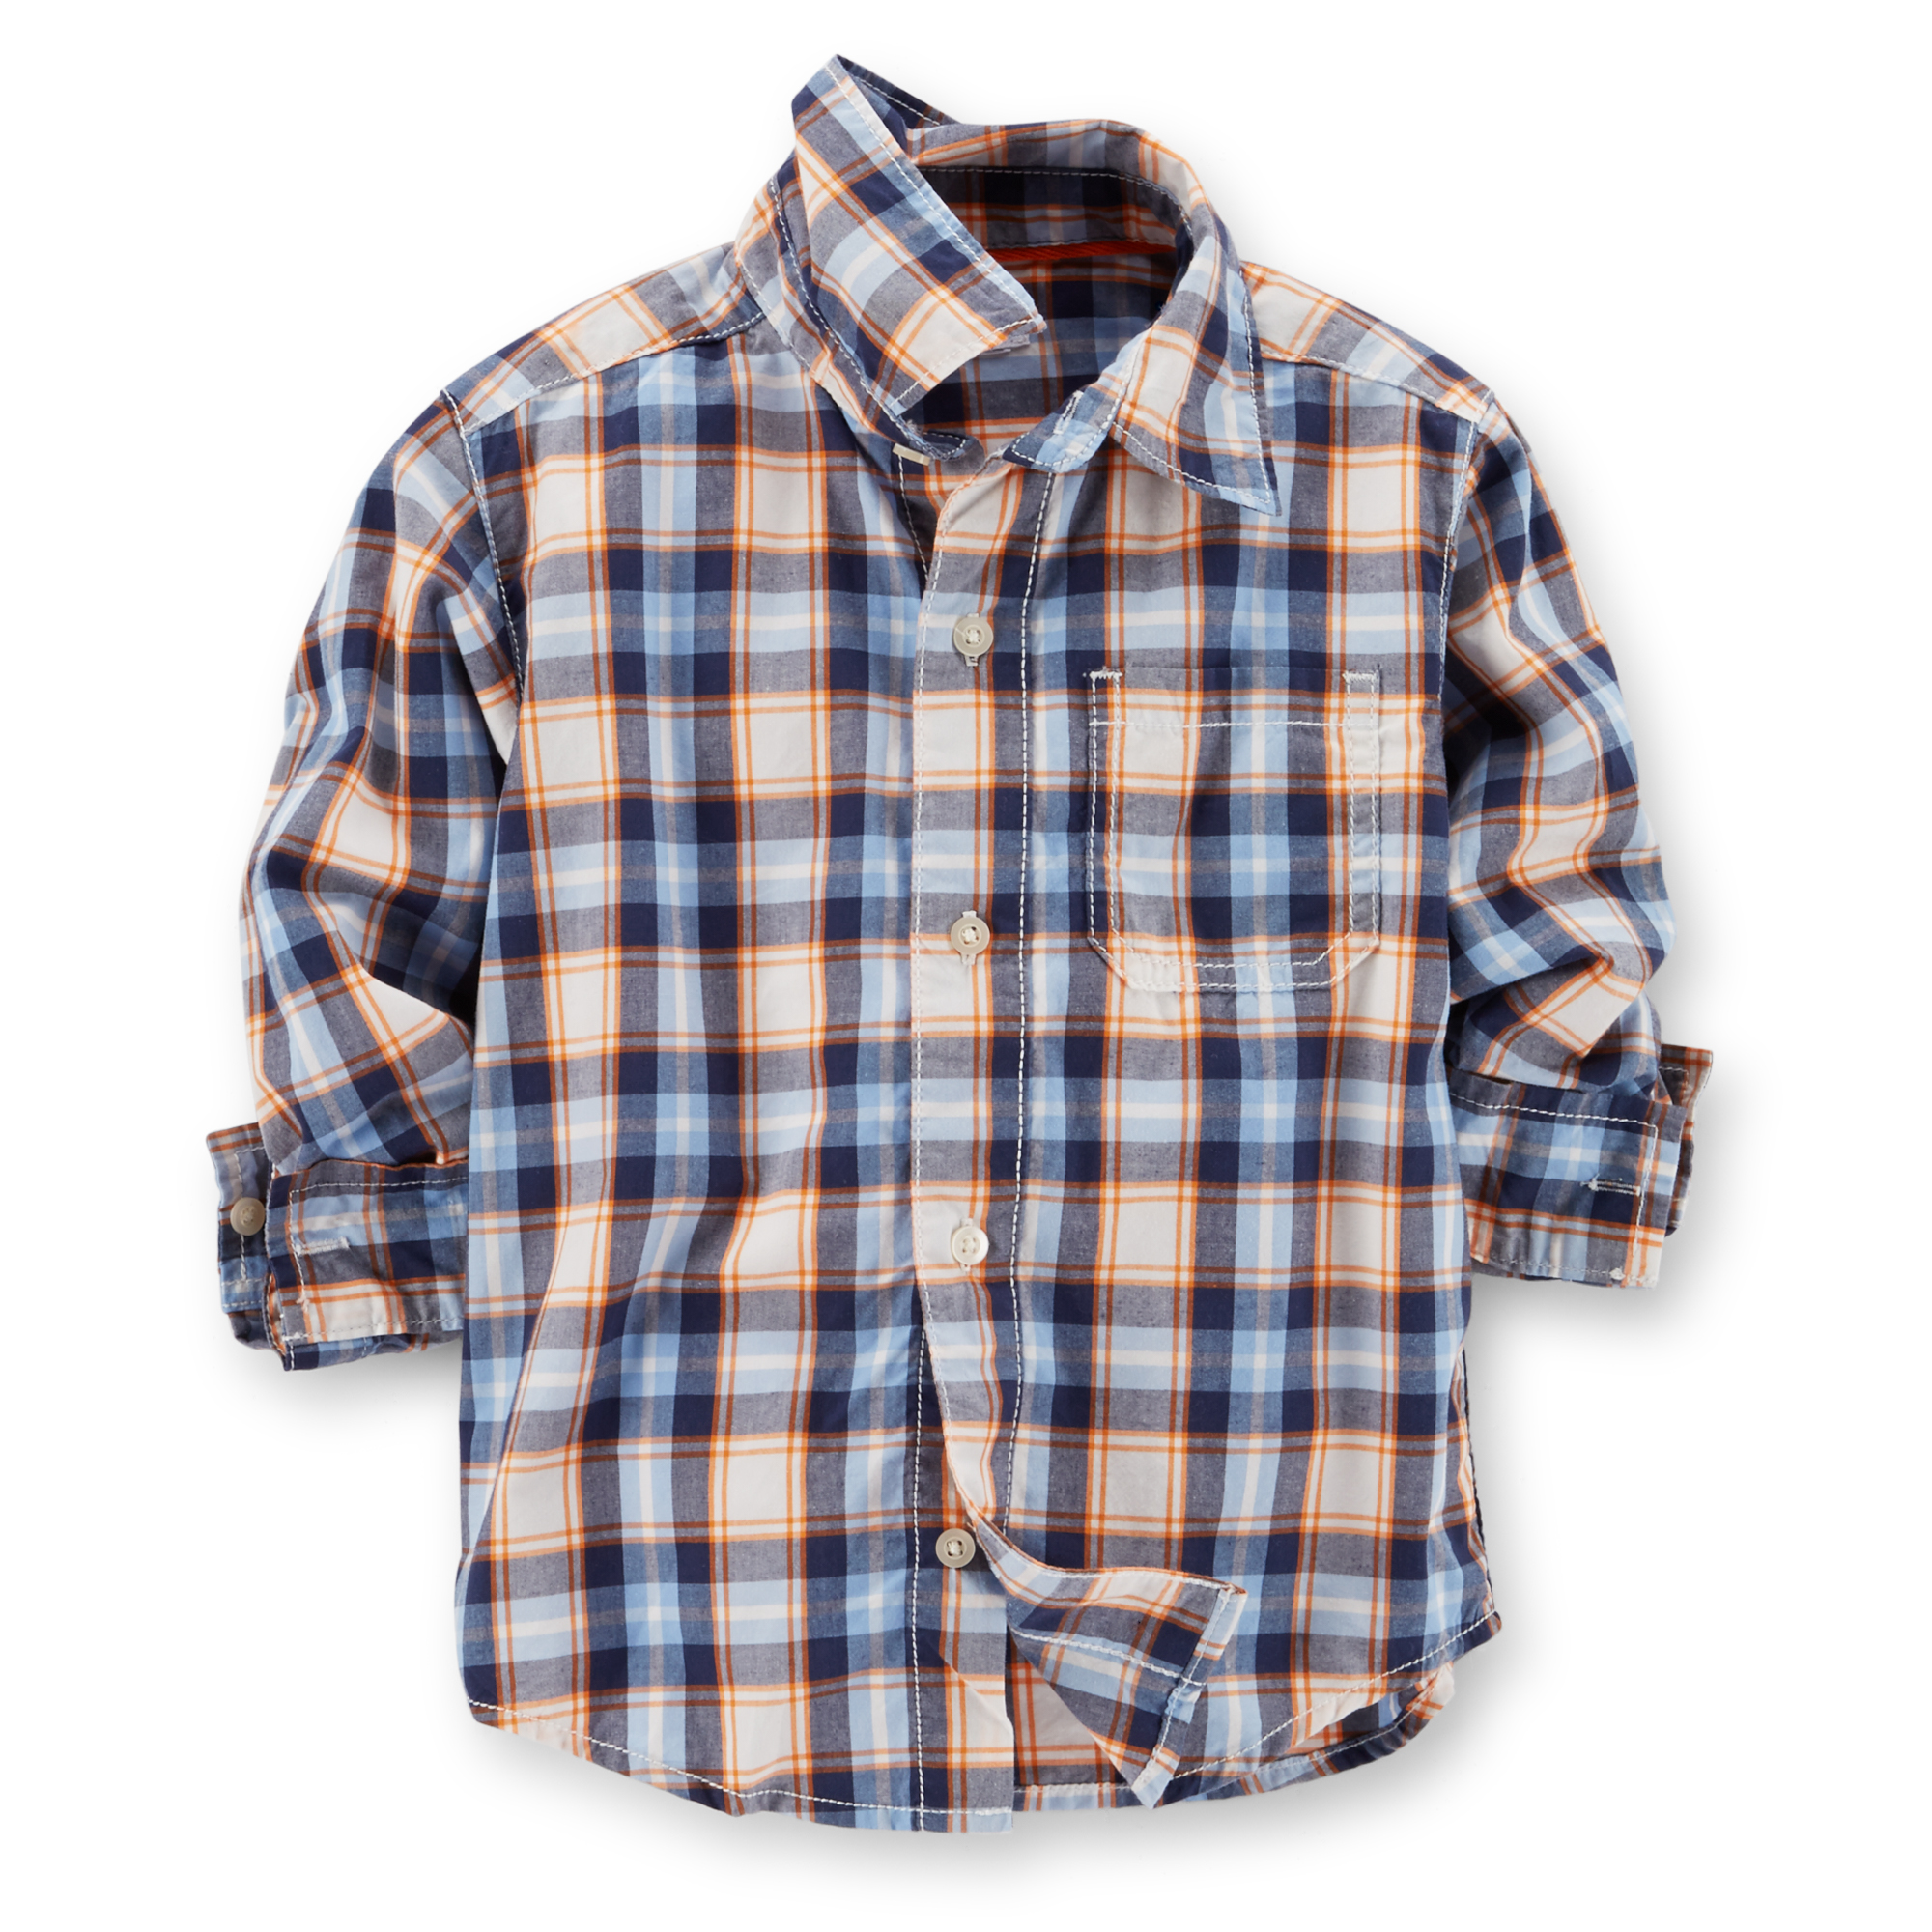 Carter's Boy's Button-Down Shirt - Plaid